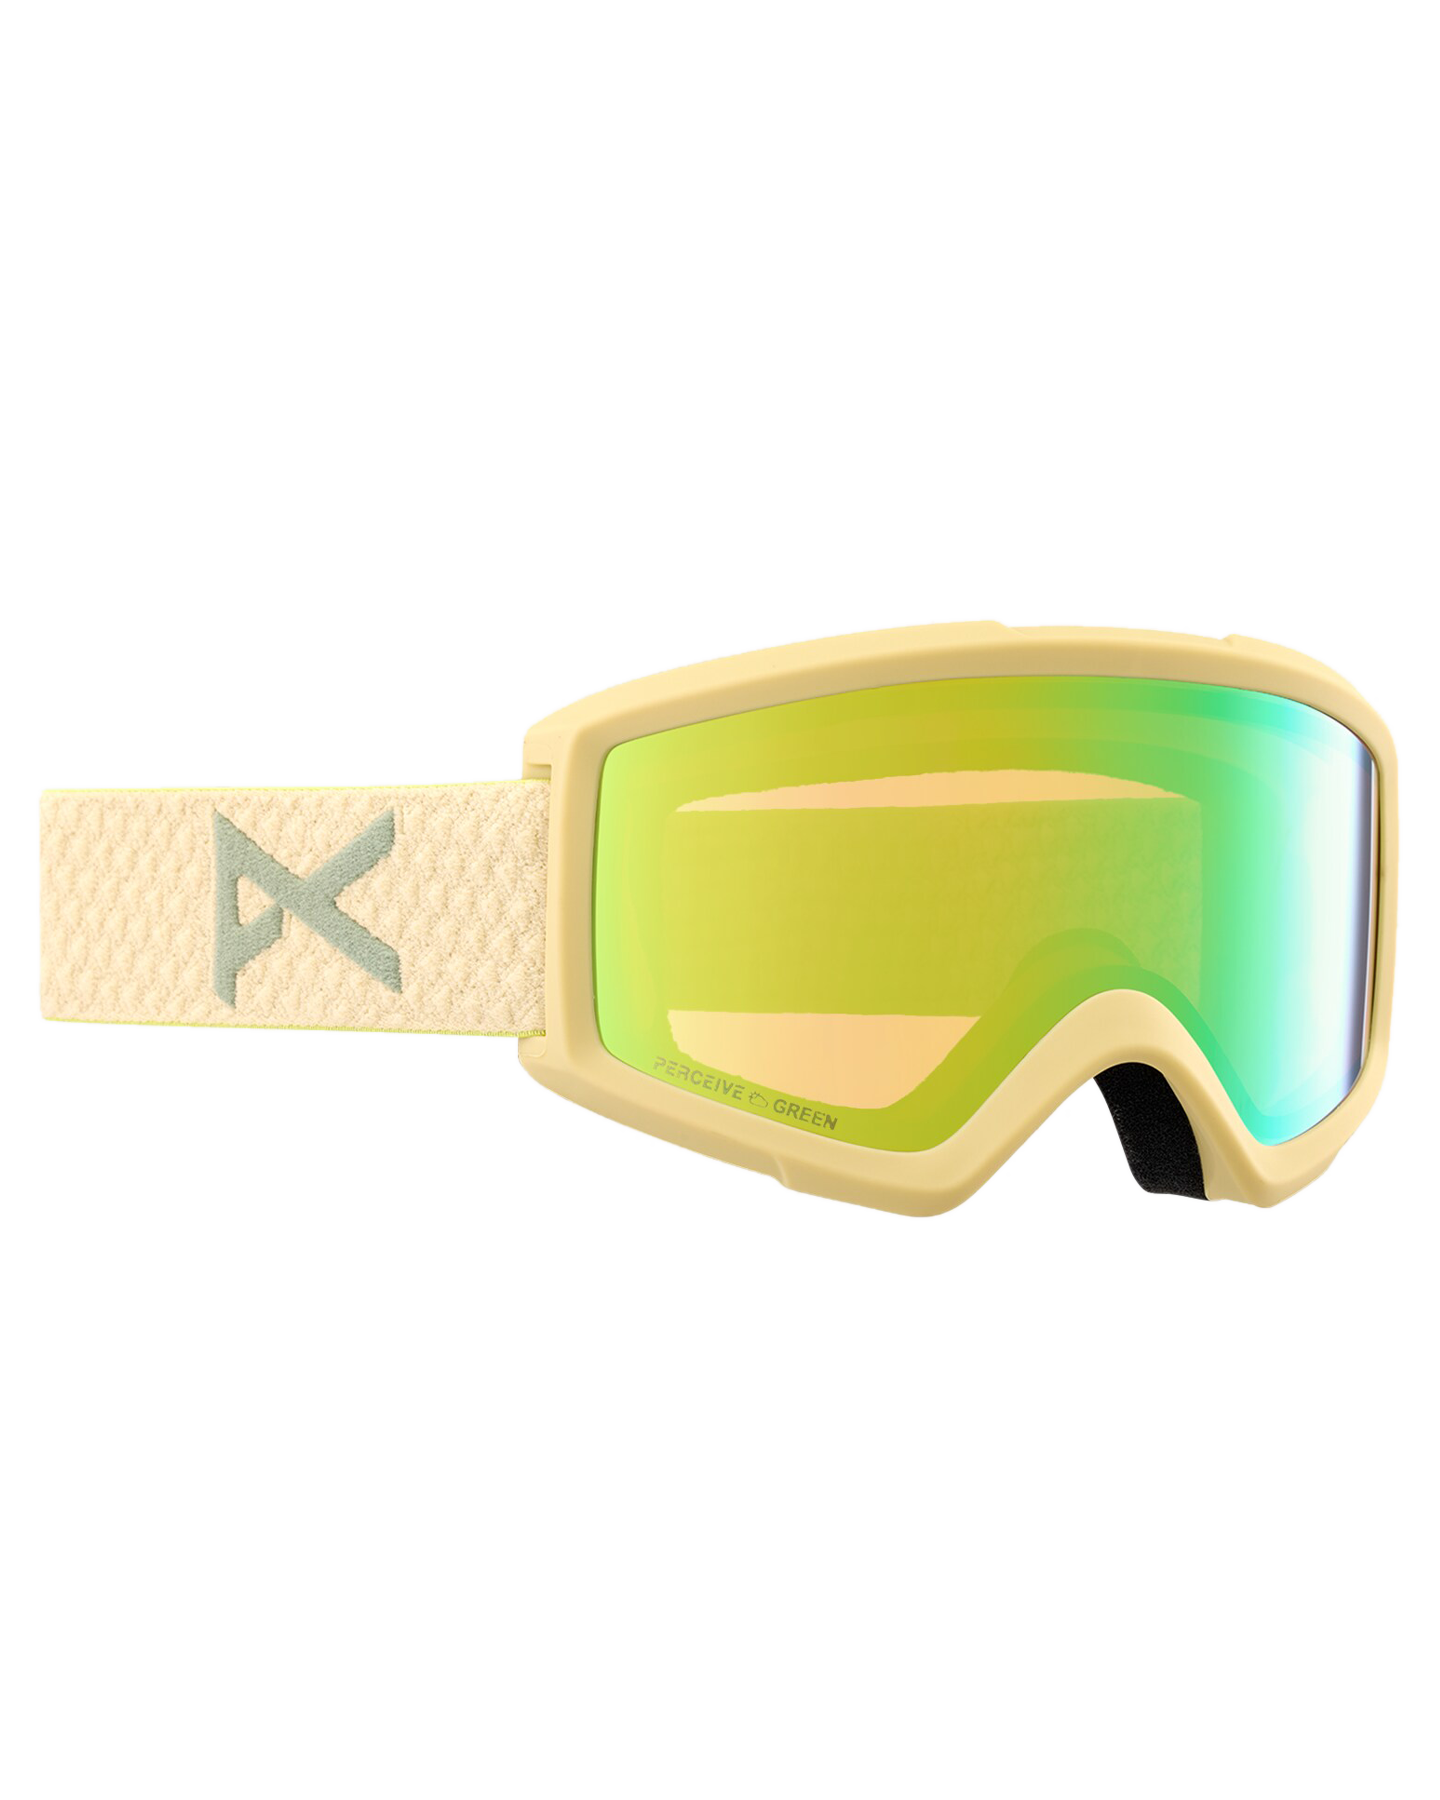 Anon Helix 2.0 Snow Goggles + Bonus Lens - Mushroom/Perceive Variable Green Lens Men's Snow Goggles - Trojan Wake Ski Snow